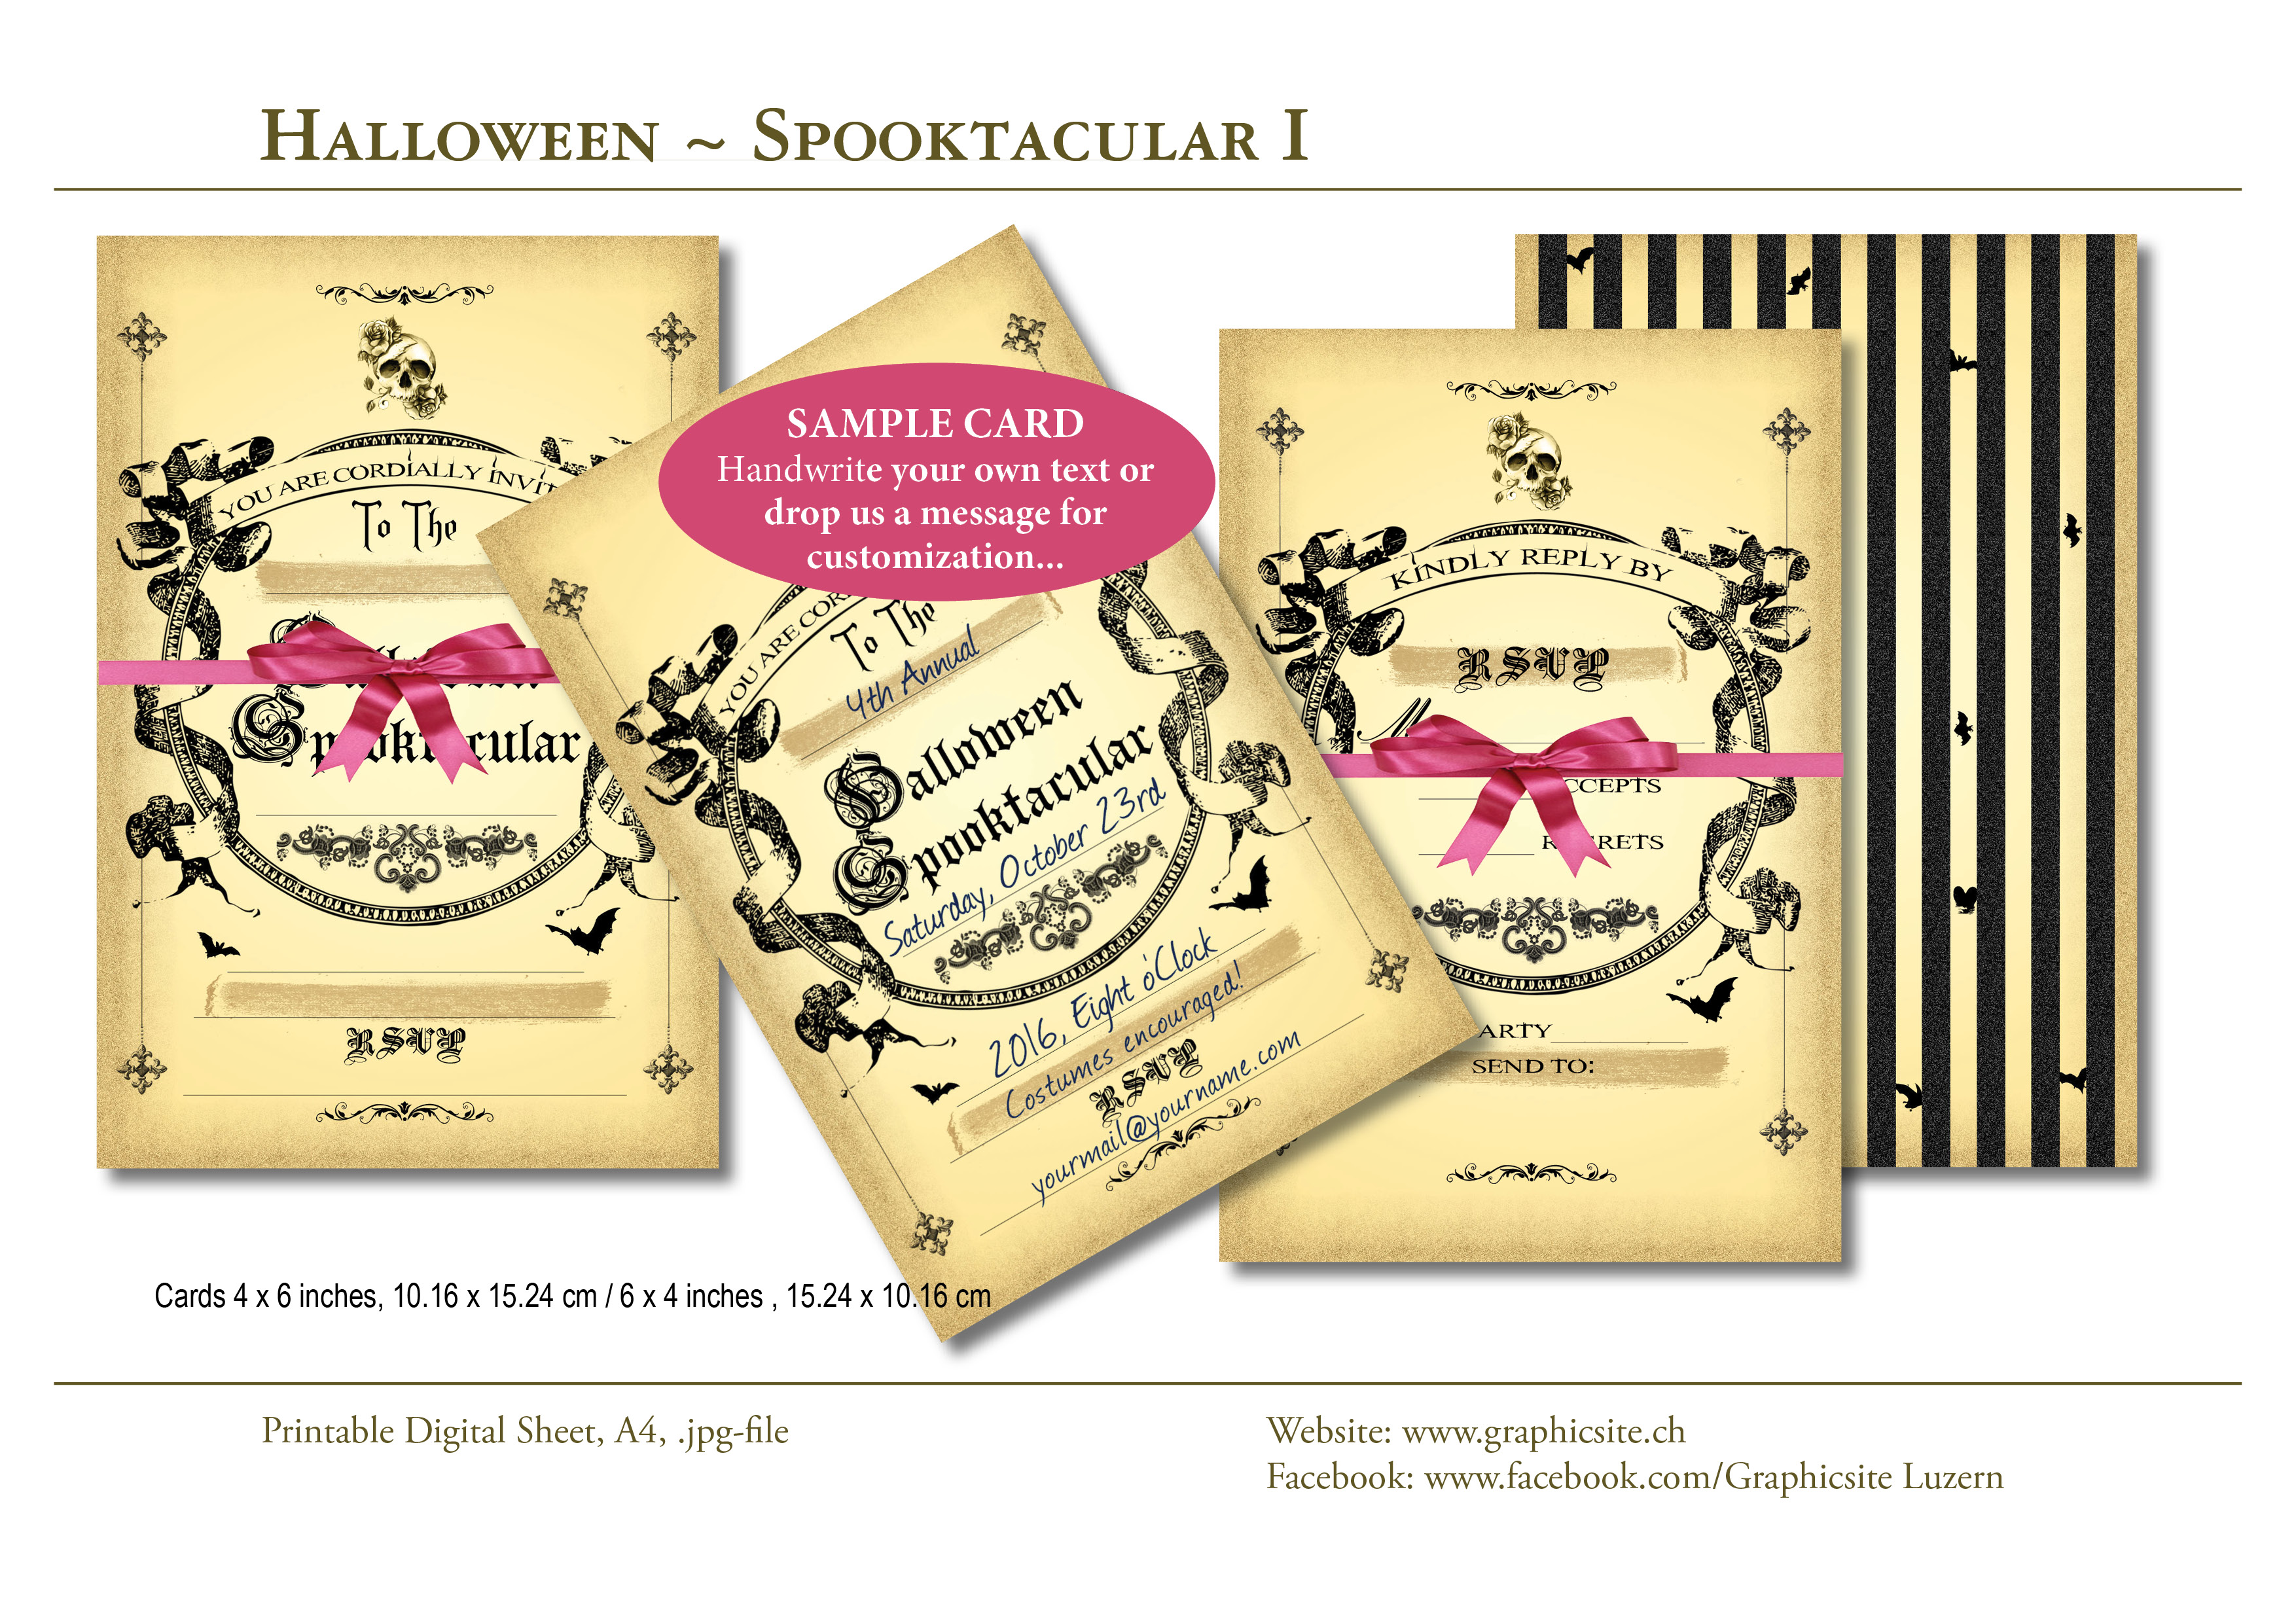 Printable Digital Sheets - 6x4 Cards - Halloween 1